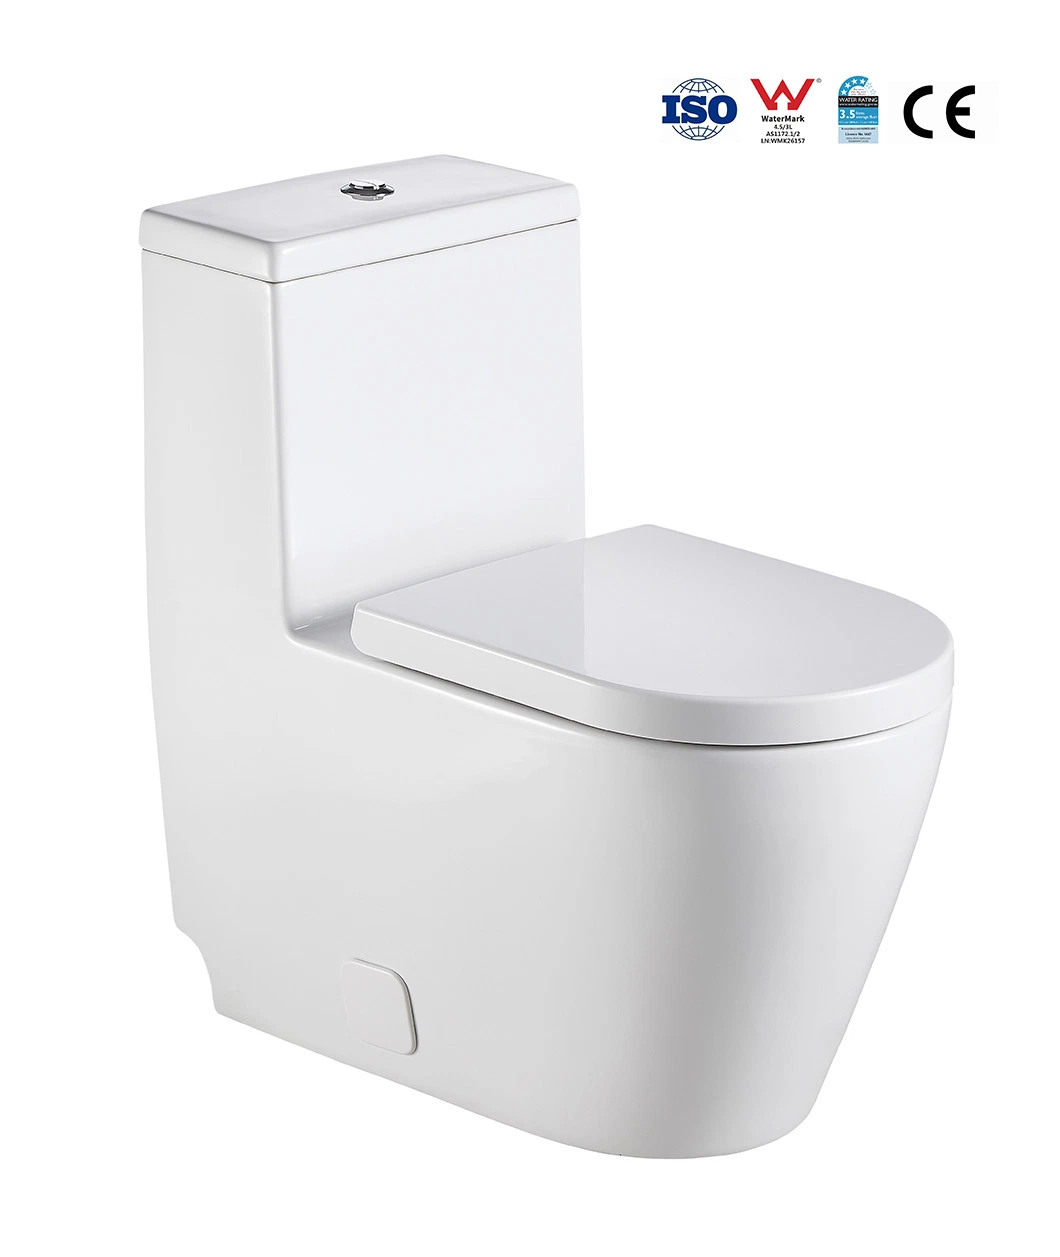 Royal Ceramic Sanitary Ware Wc Toilet Floor Mounted Bathroom One Piece Toilet Bowl Toilet